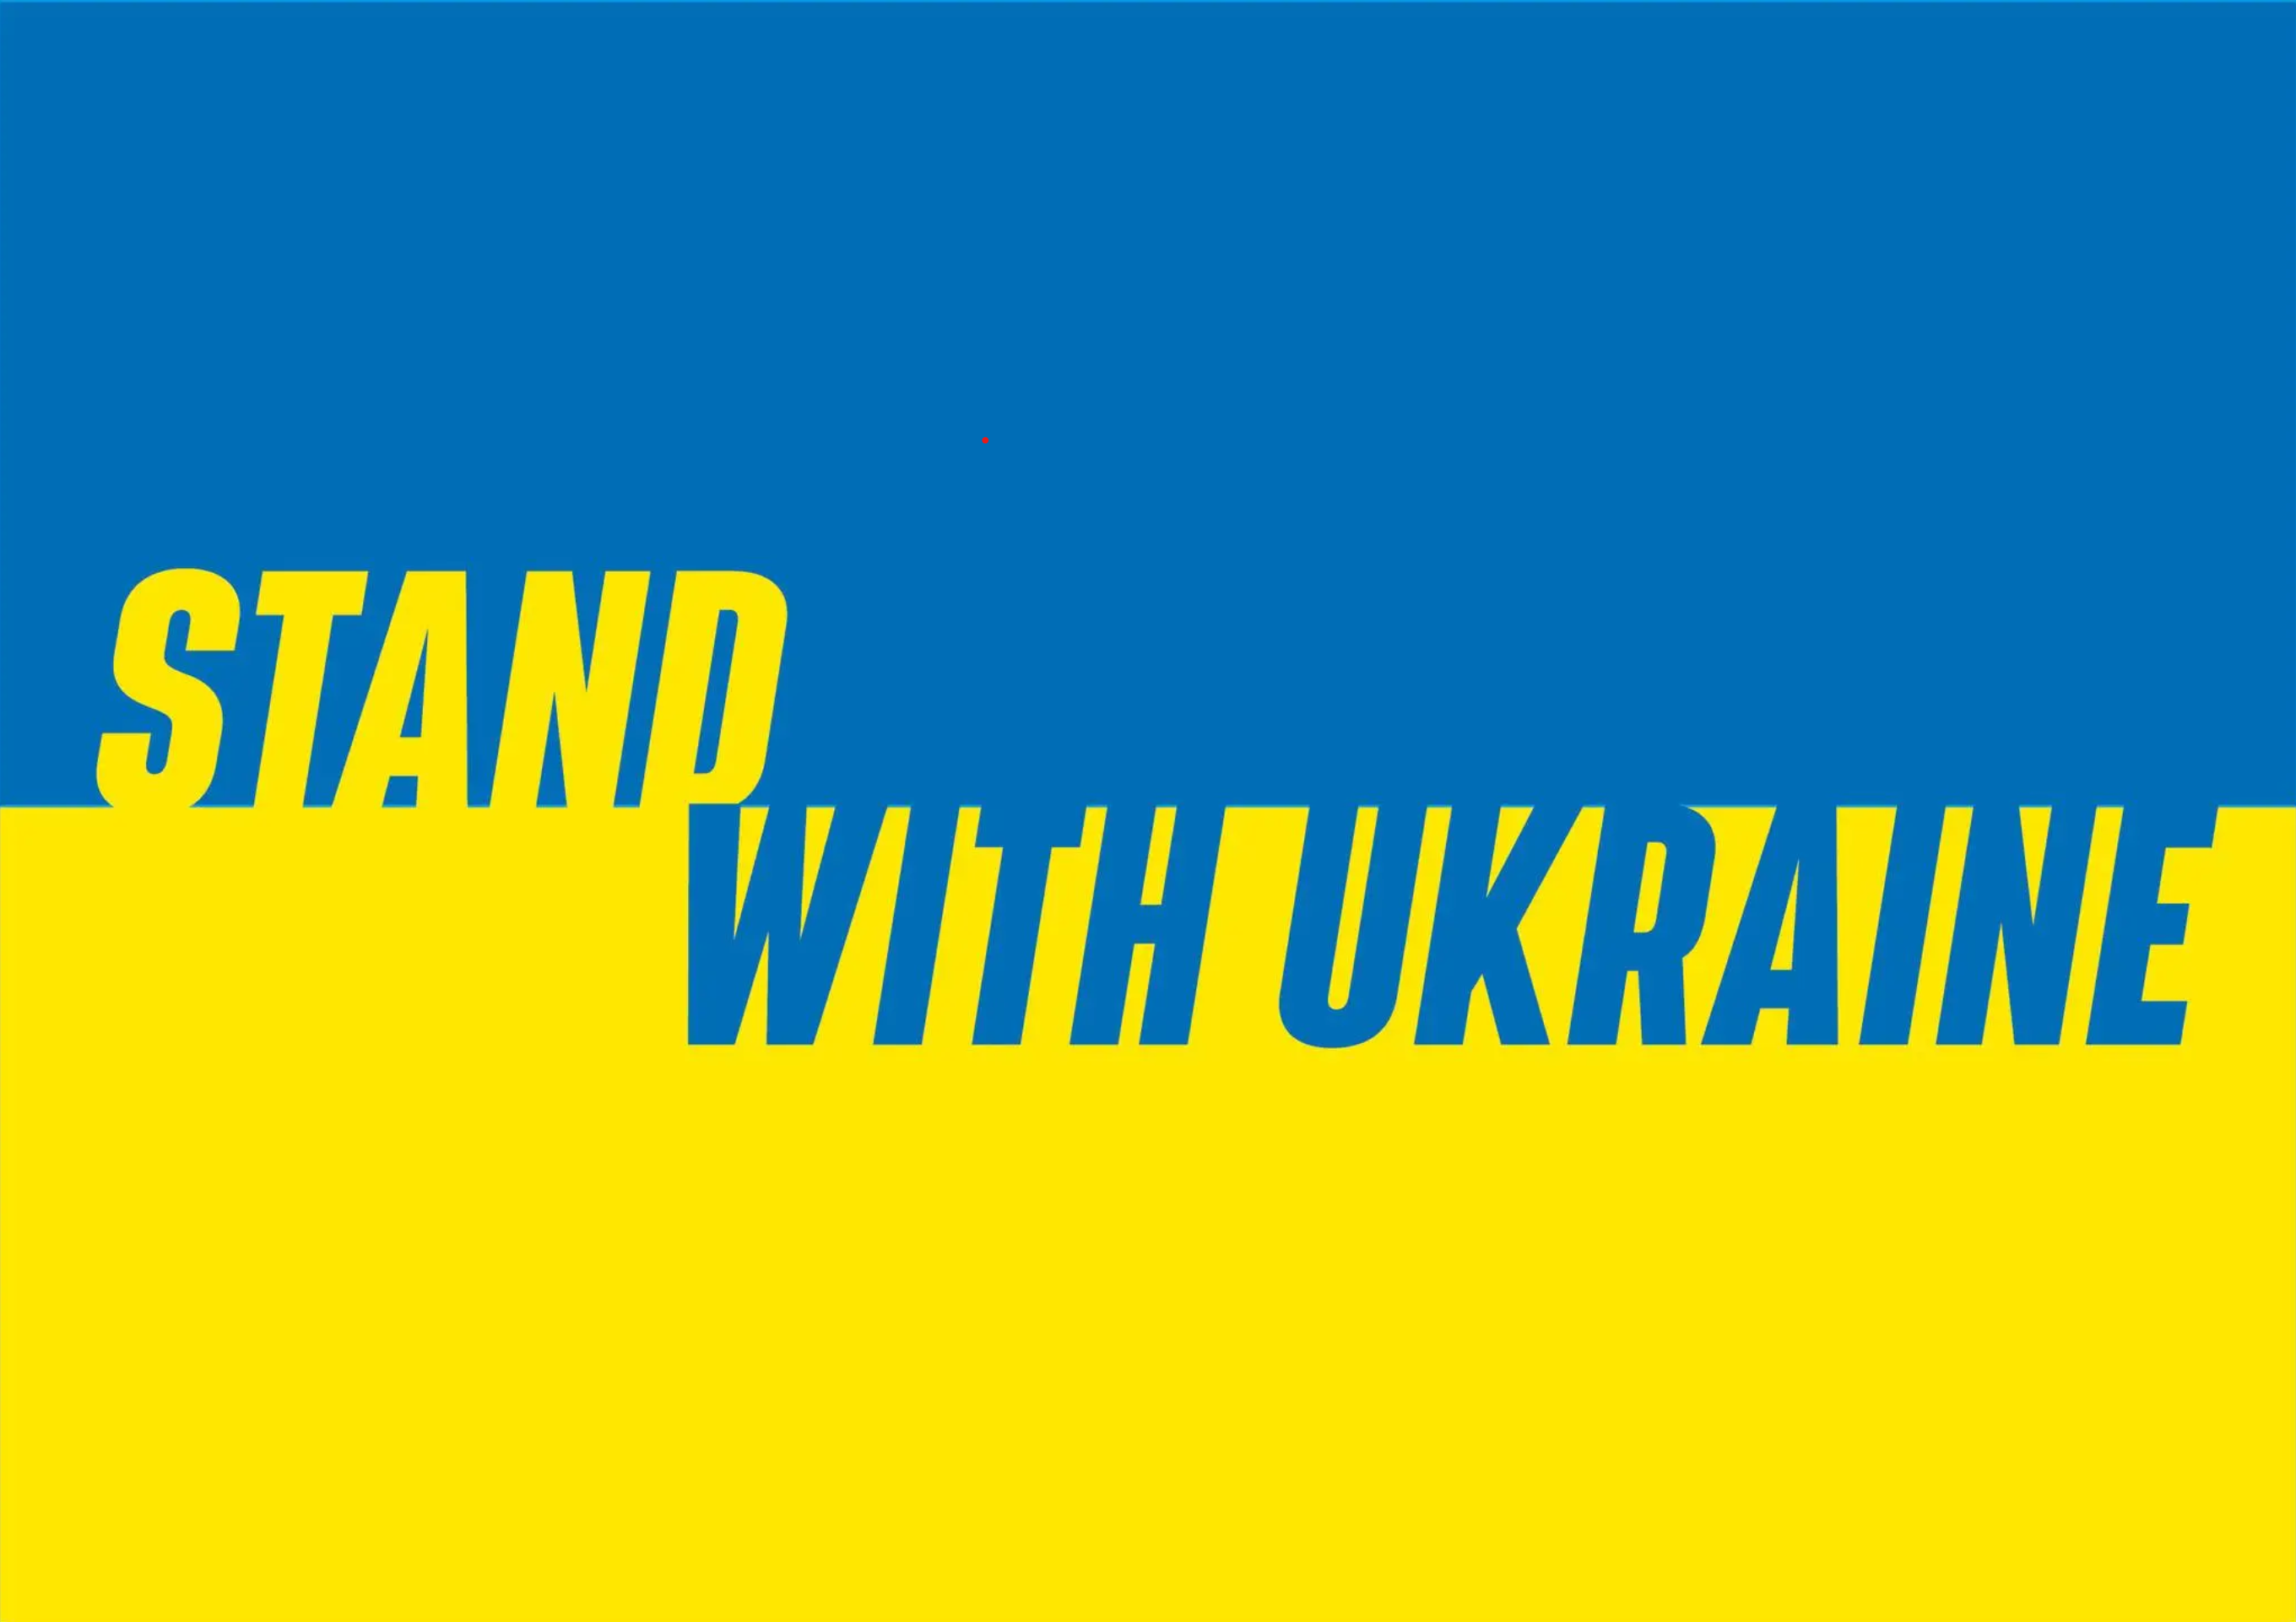 #standWithUkraine